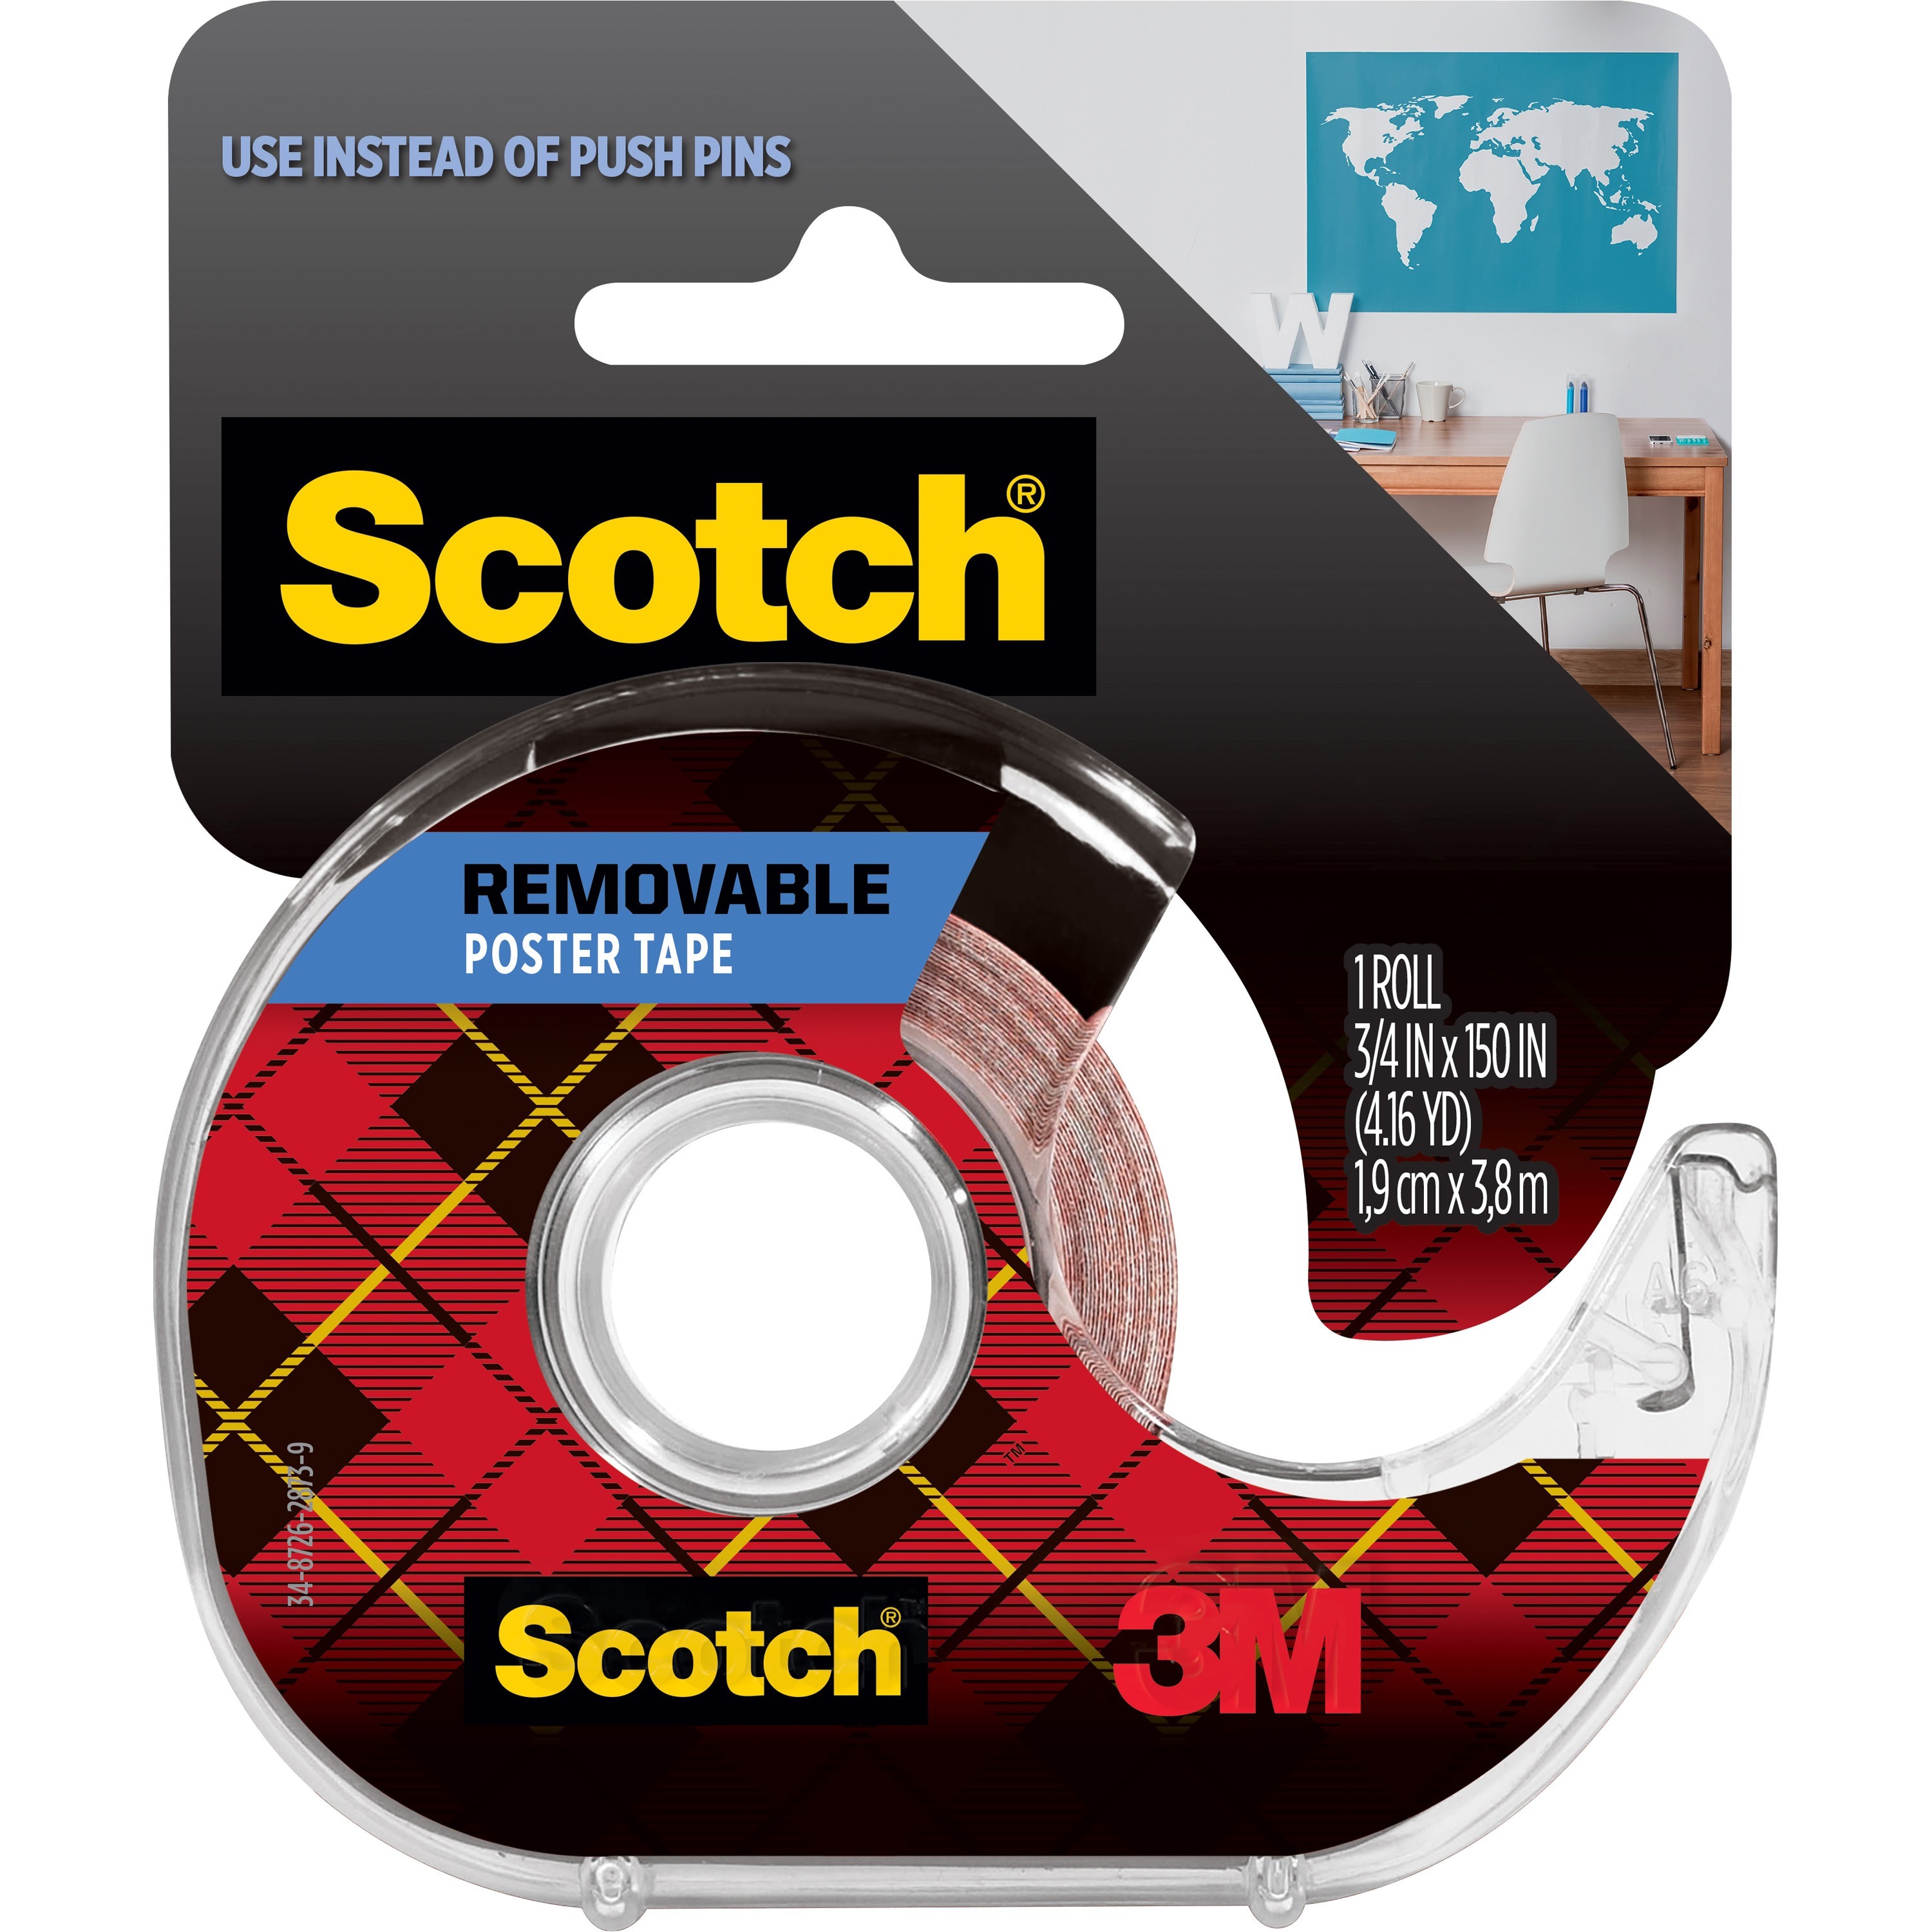 Scotch Photo Splits Double Stick Mounting Squares